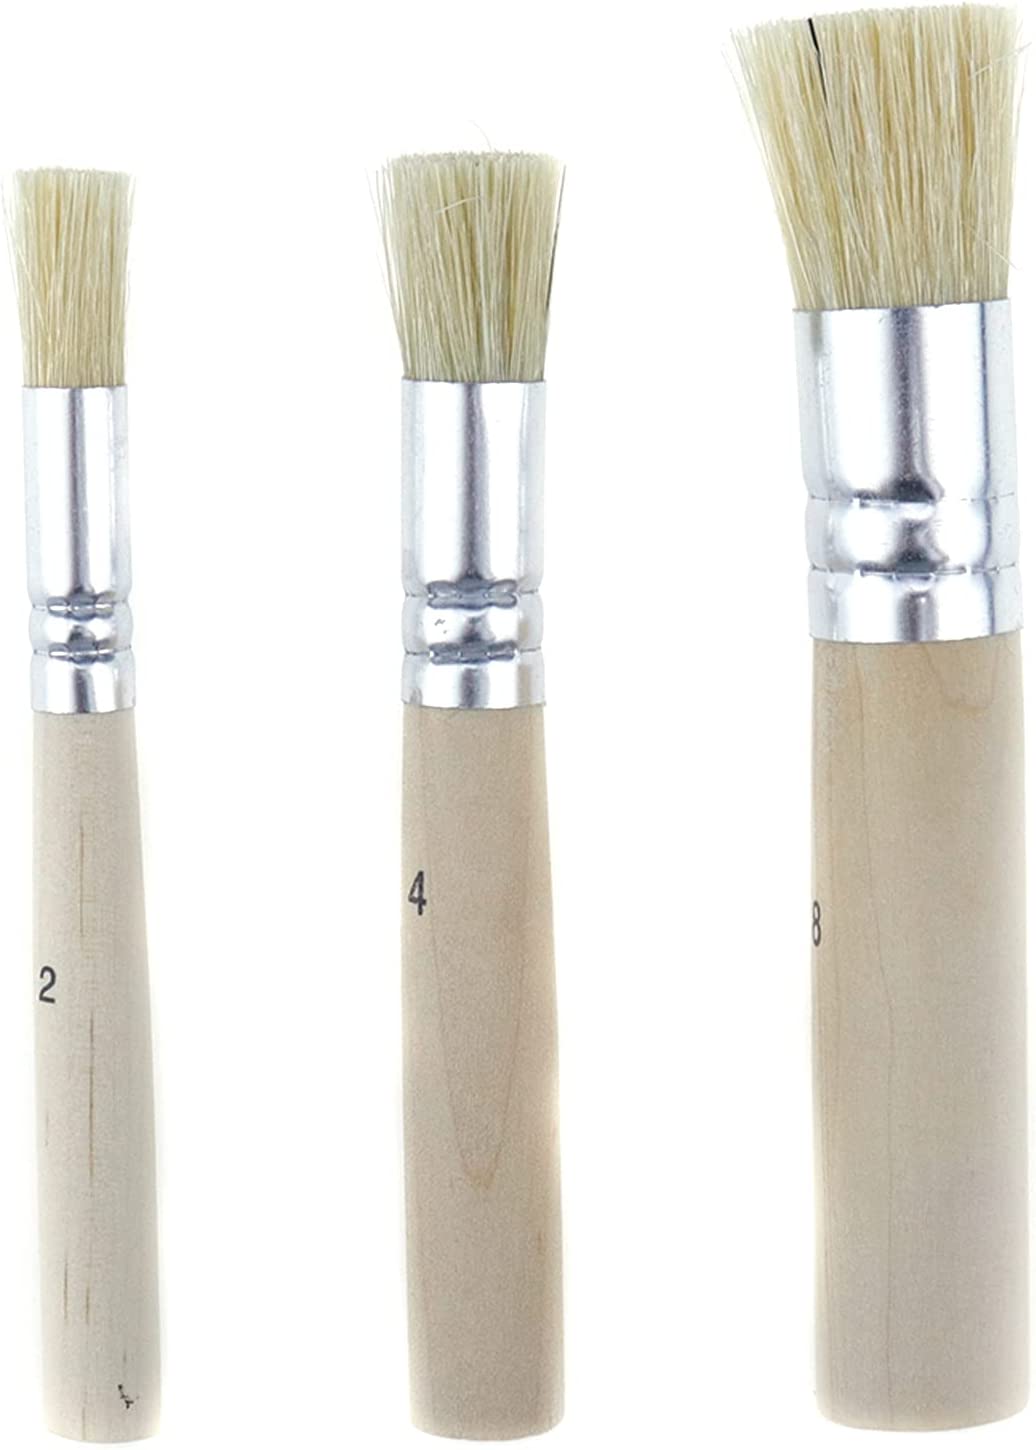 1SET/3PCS 2/4/8 Small Stencil Brushes Set,Wooden Stencil Brushes,Stencil  Brushes for Painting,Artist Natural Bristle Paint Brushes,0.66/0.50/0.33  Diameter 